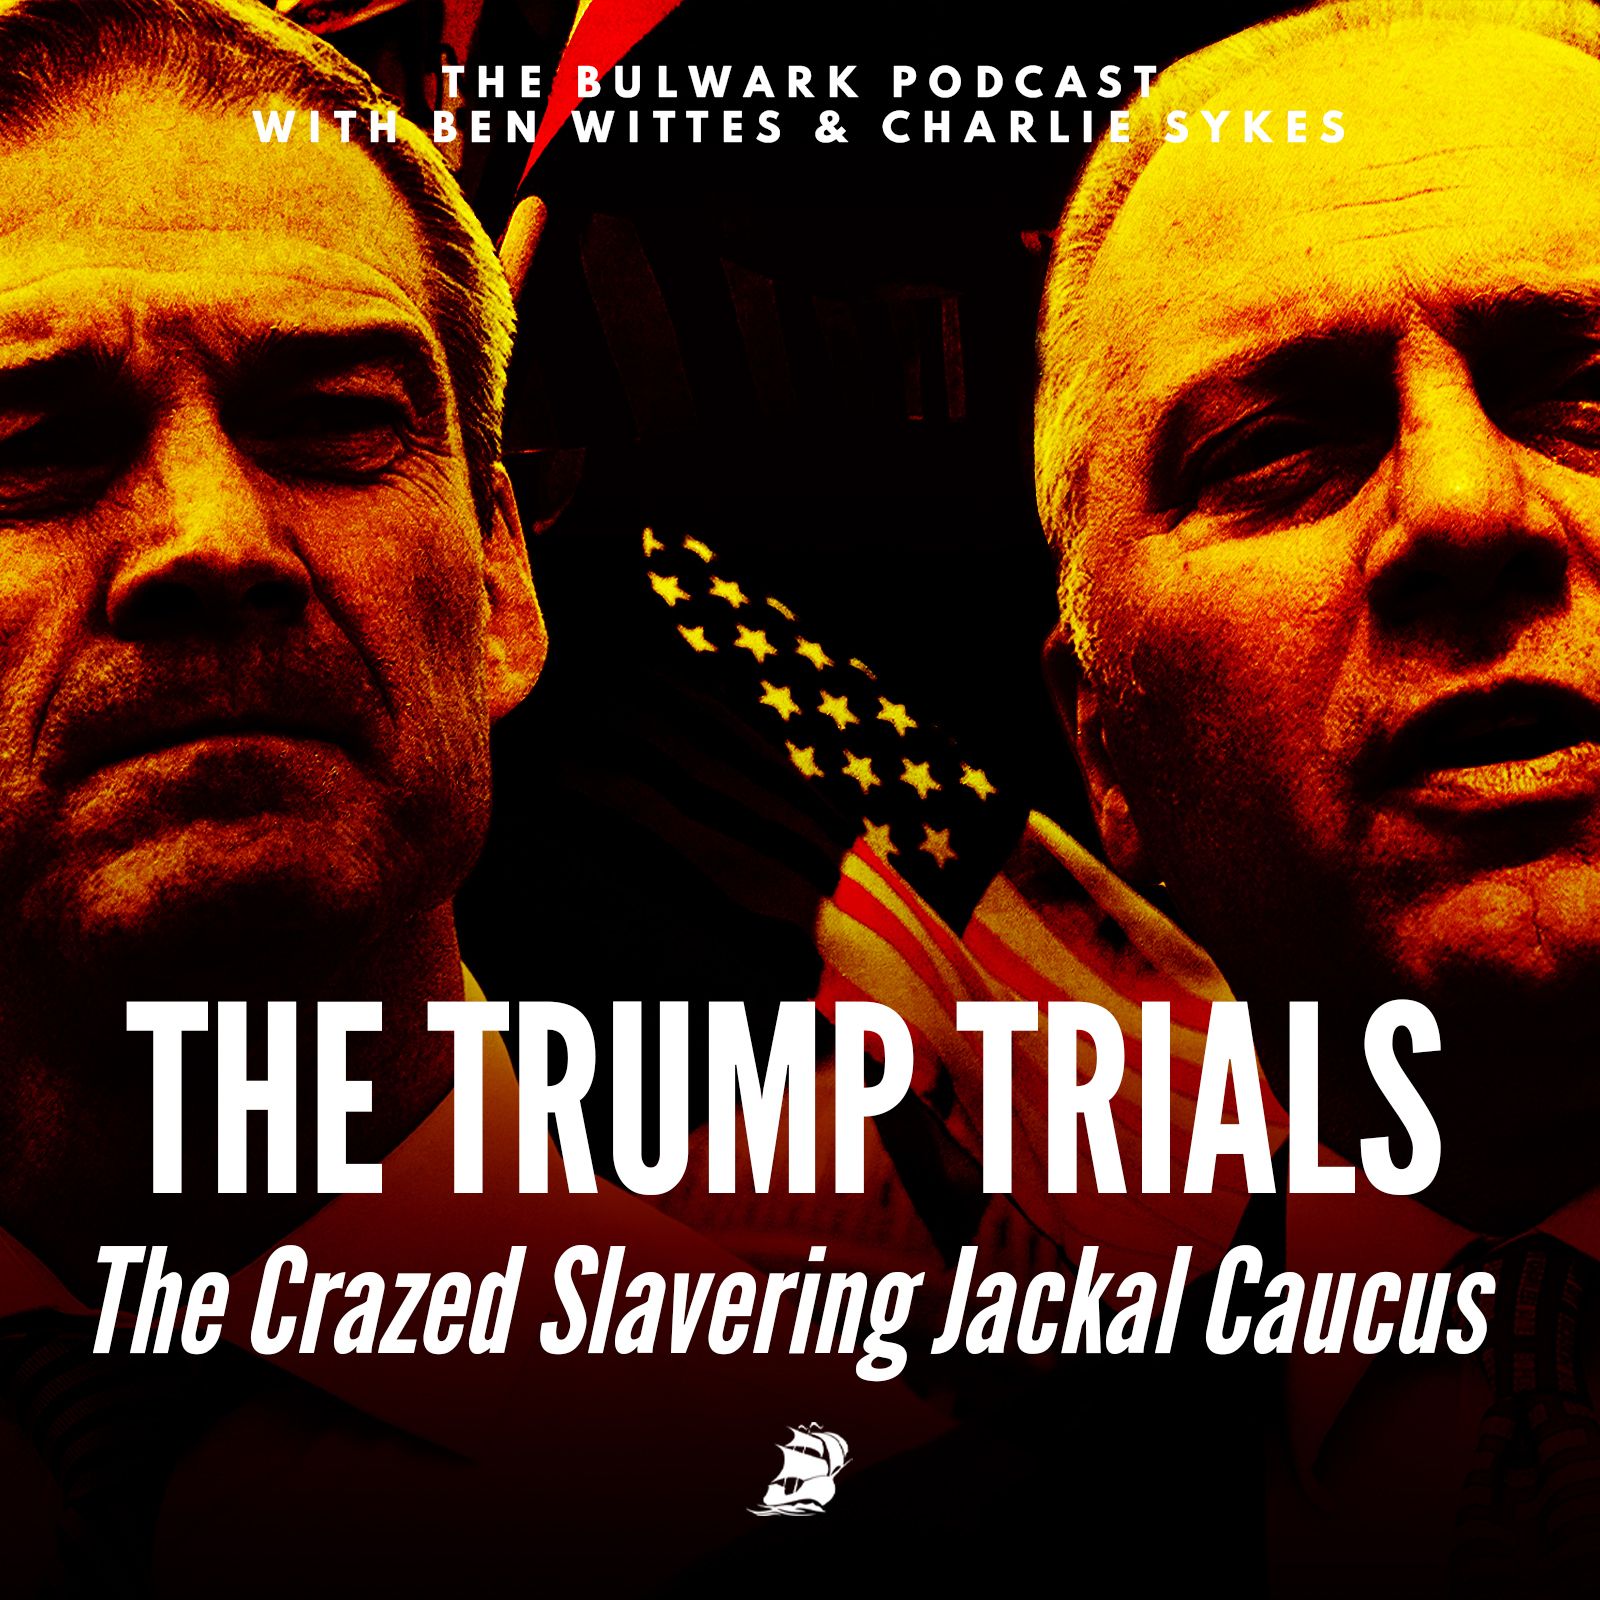 The Crazed Slavering Jackal Caucus by The Bulwark Podcast